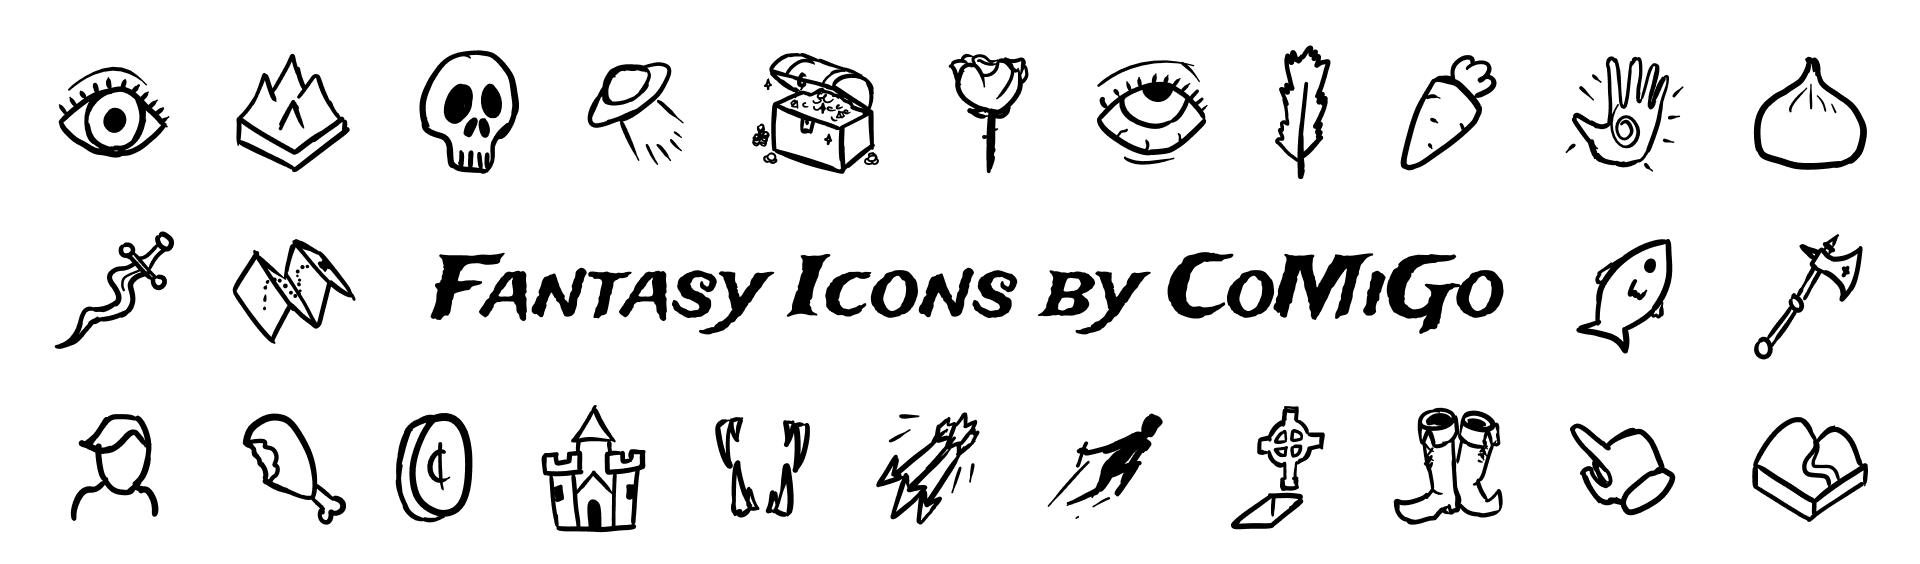 CC0 Hand-drawn Fantasy Icon Pack